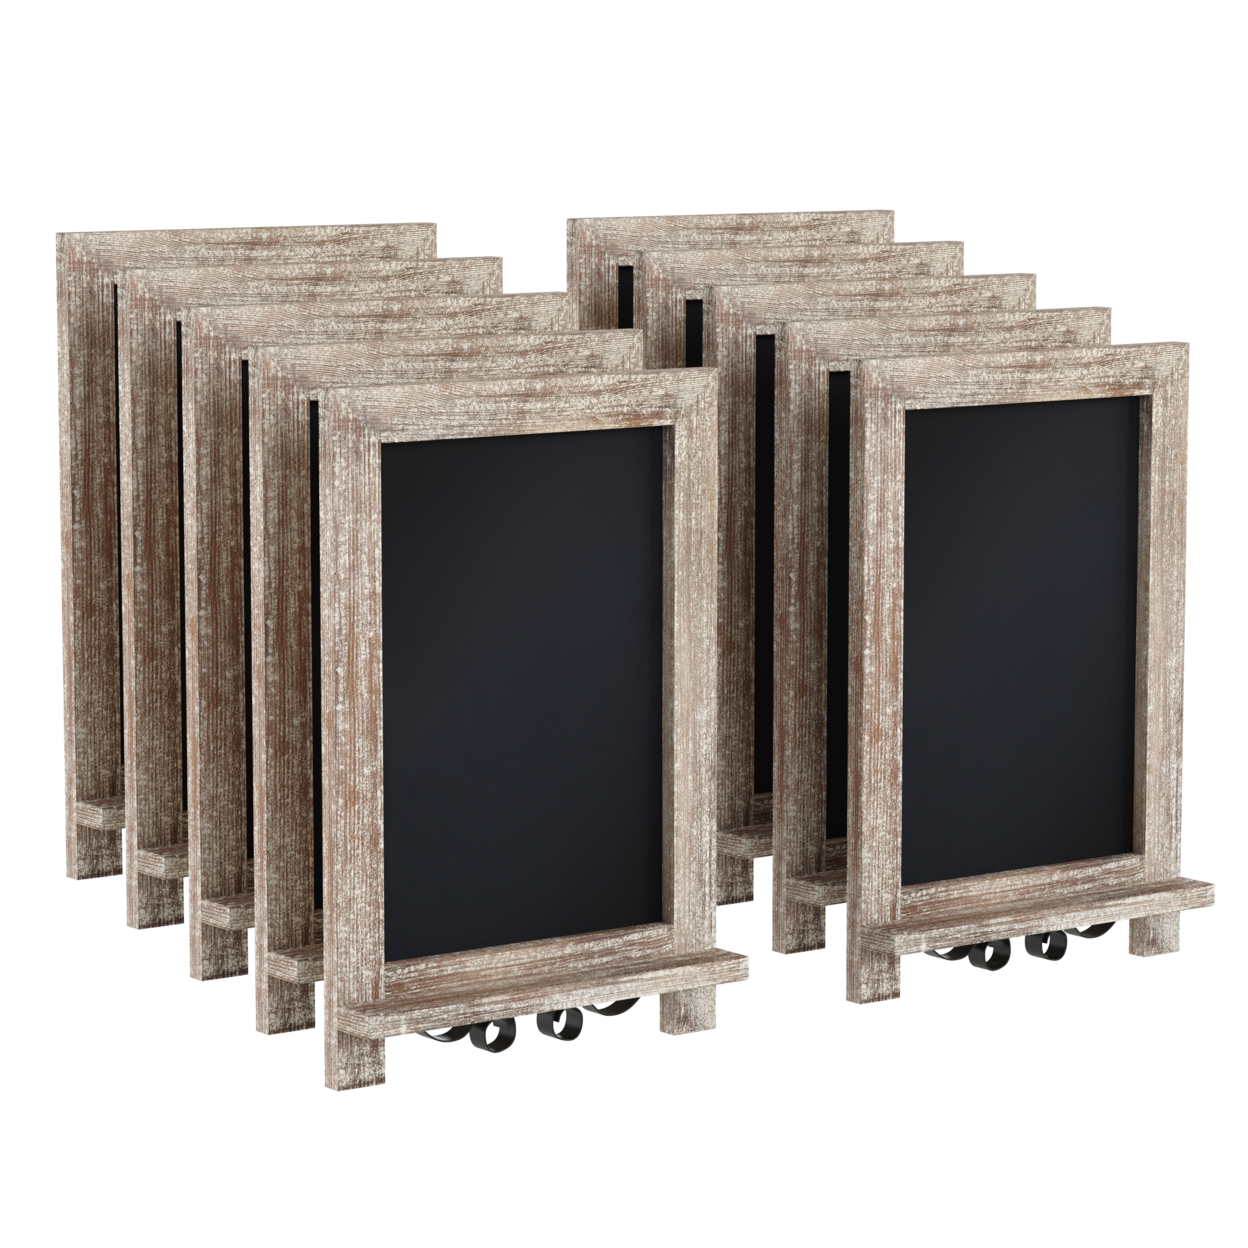 Set Of 10 Magnetic Chalkboard, Scrolled Metal Legs, Weathered Brown Frame